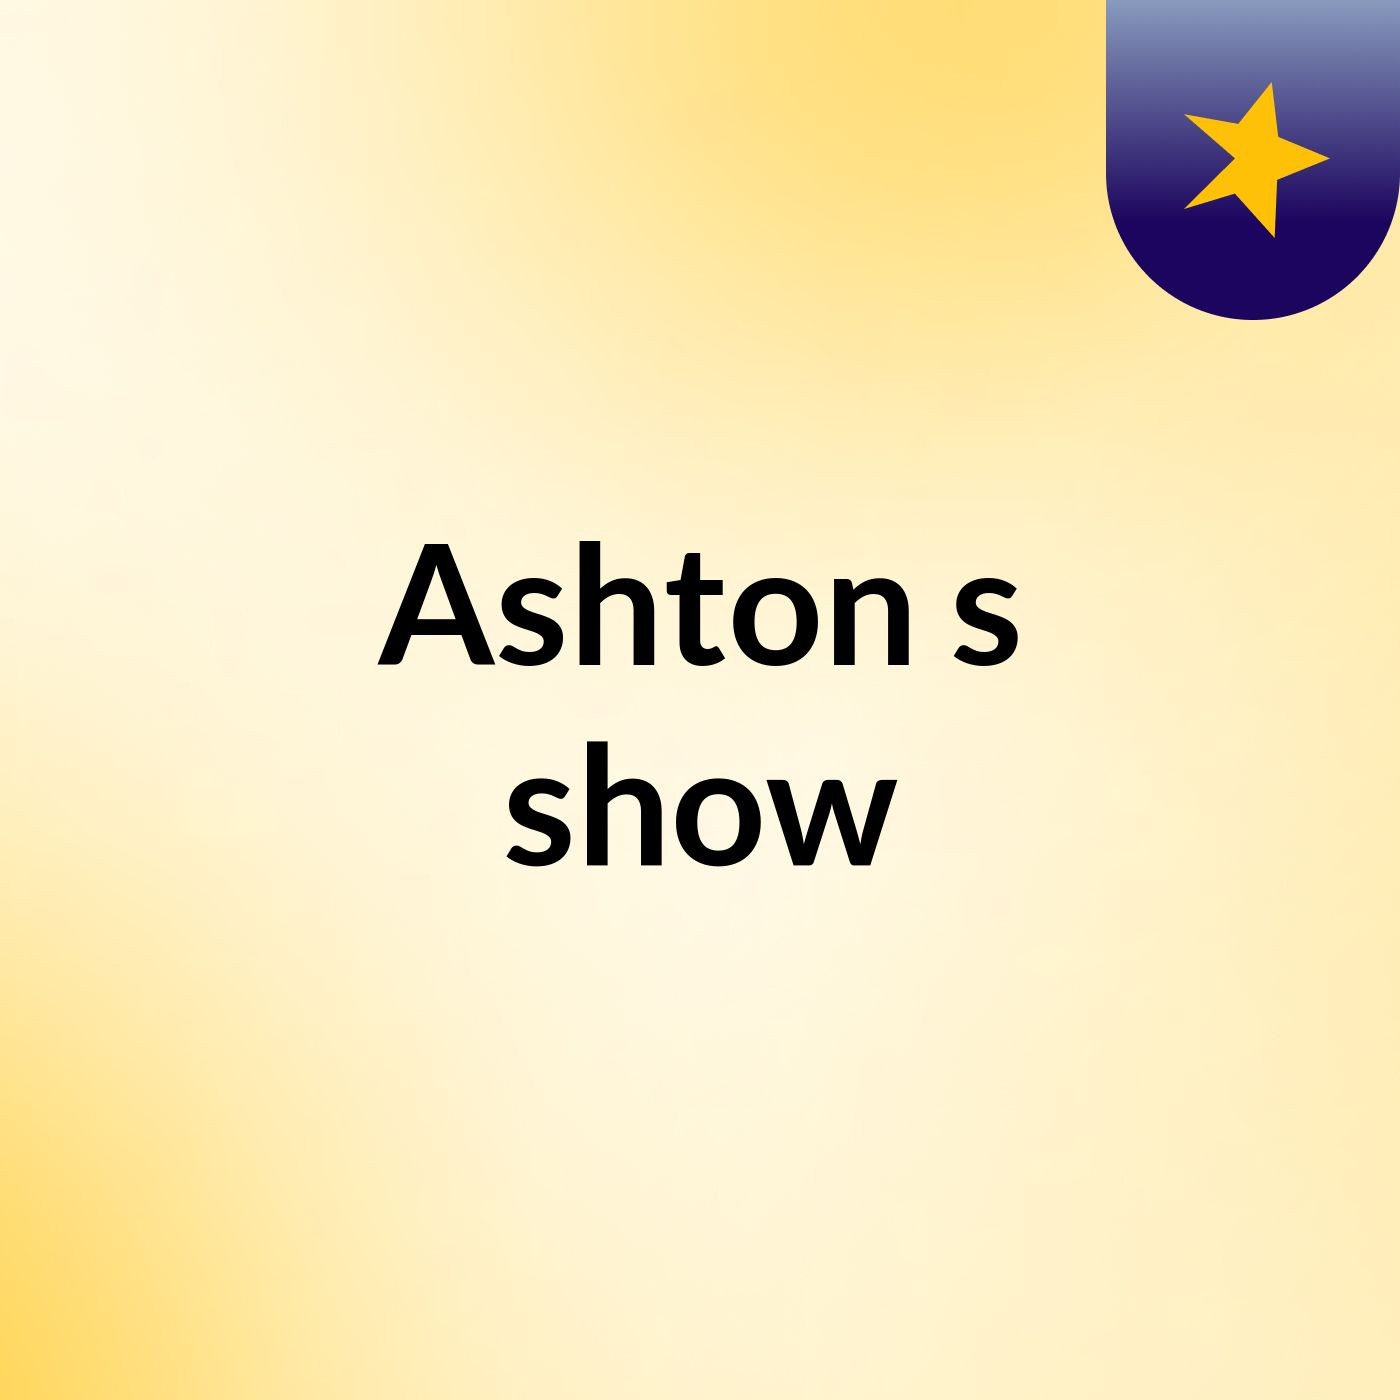 Ashton's show